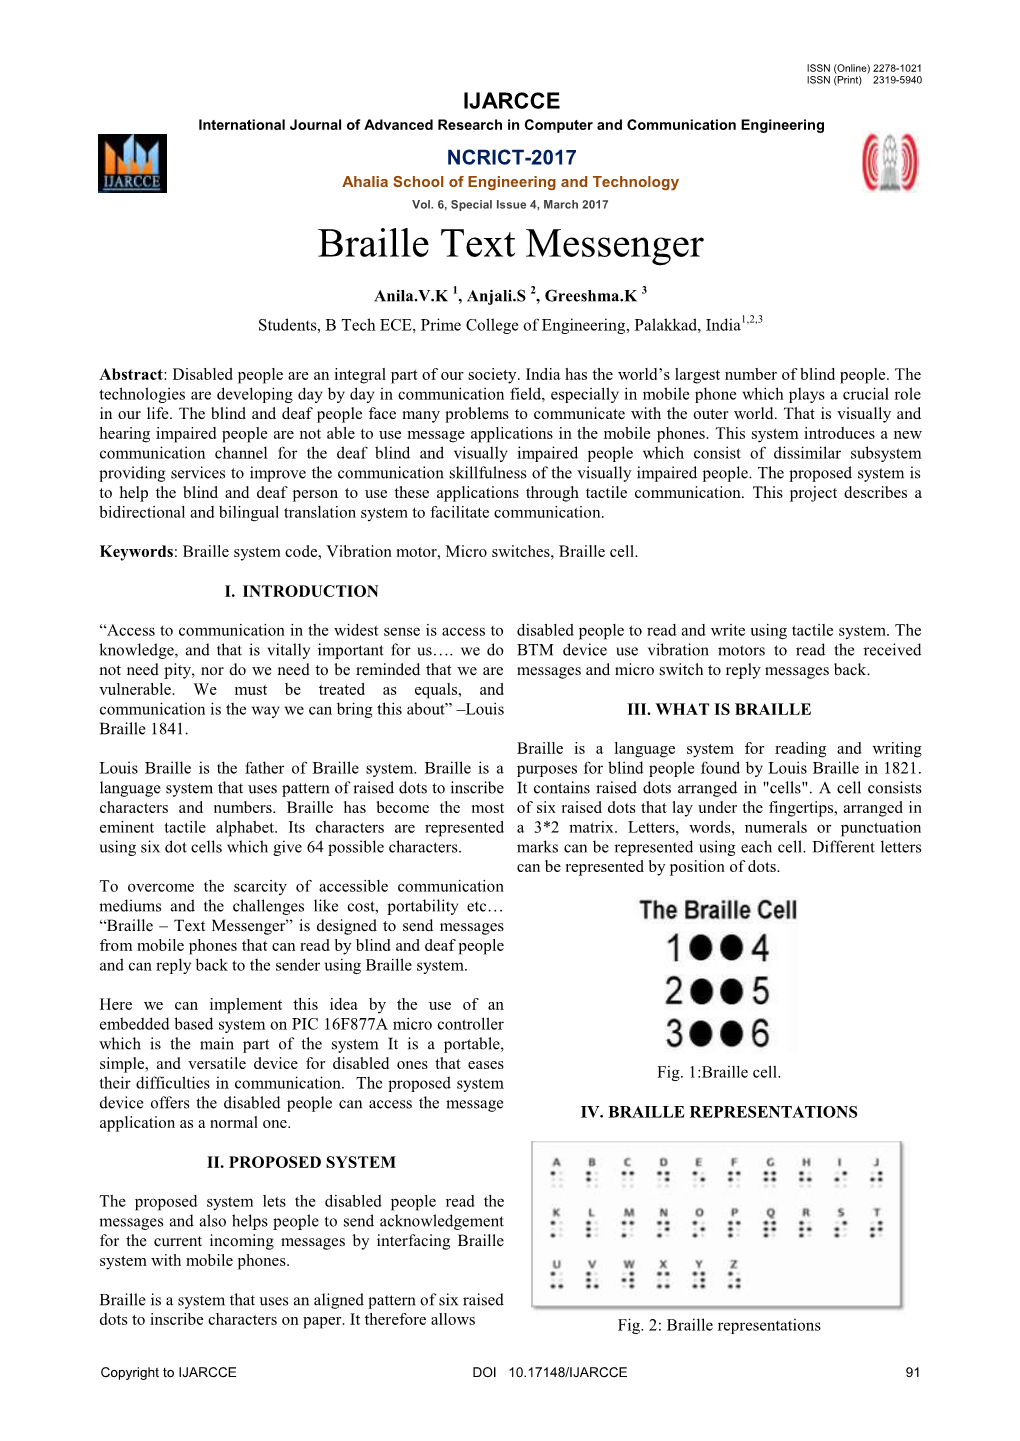 Braille Text Messenger